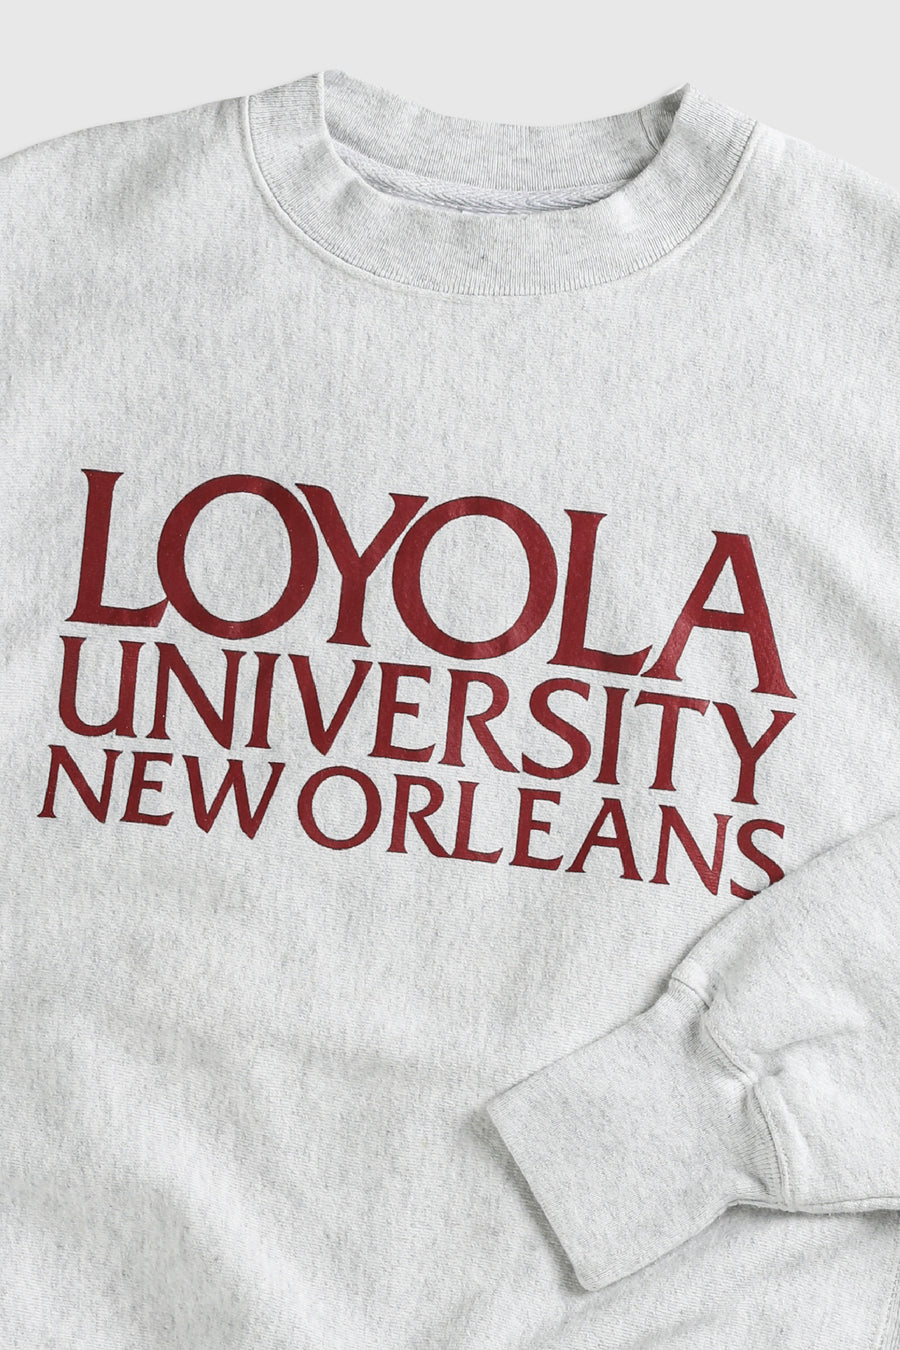 Vintage Loyola University Sweatshirt